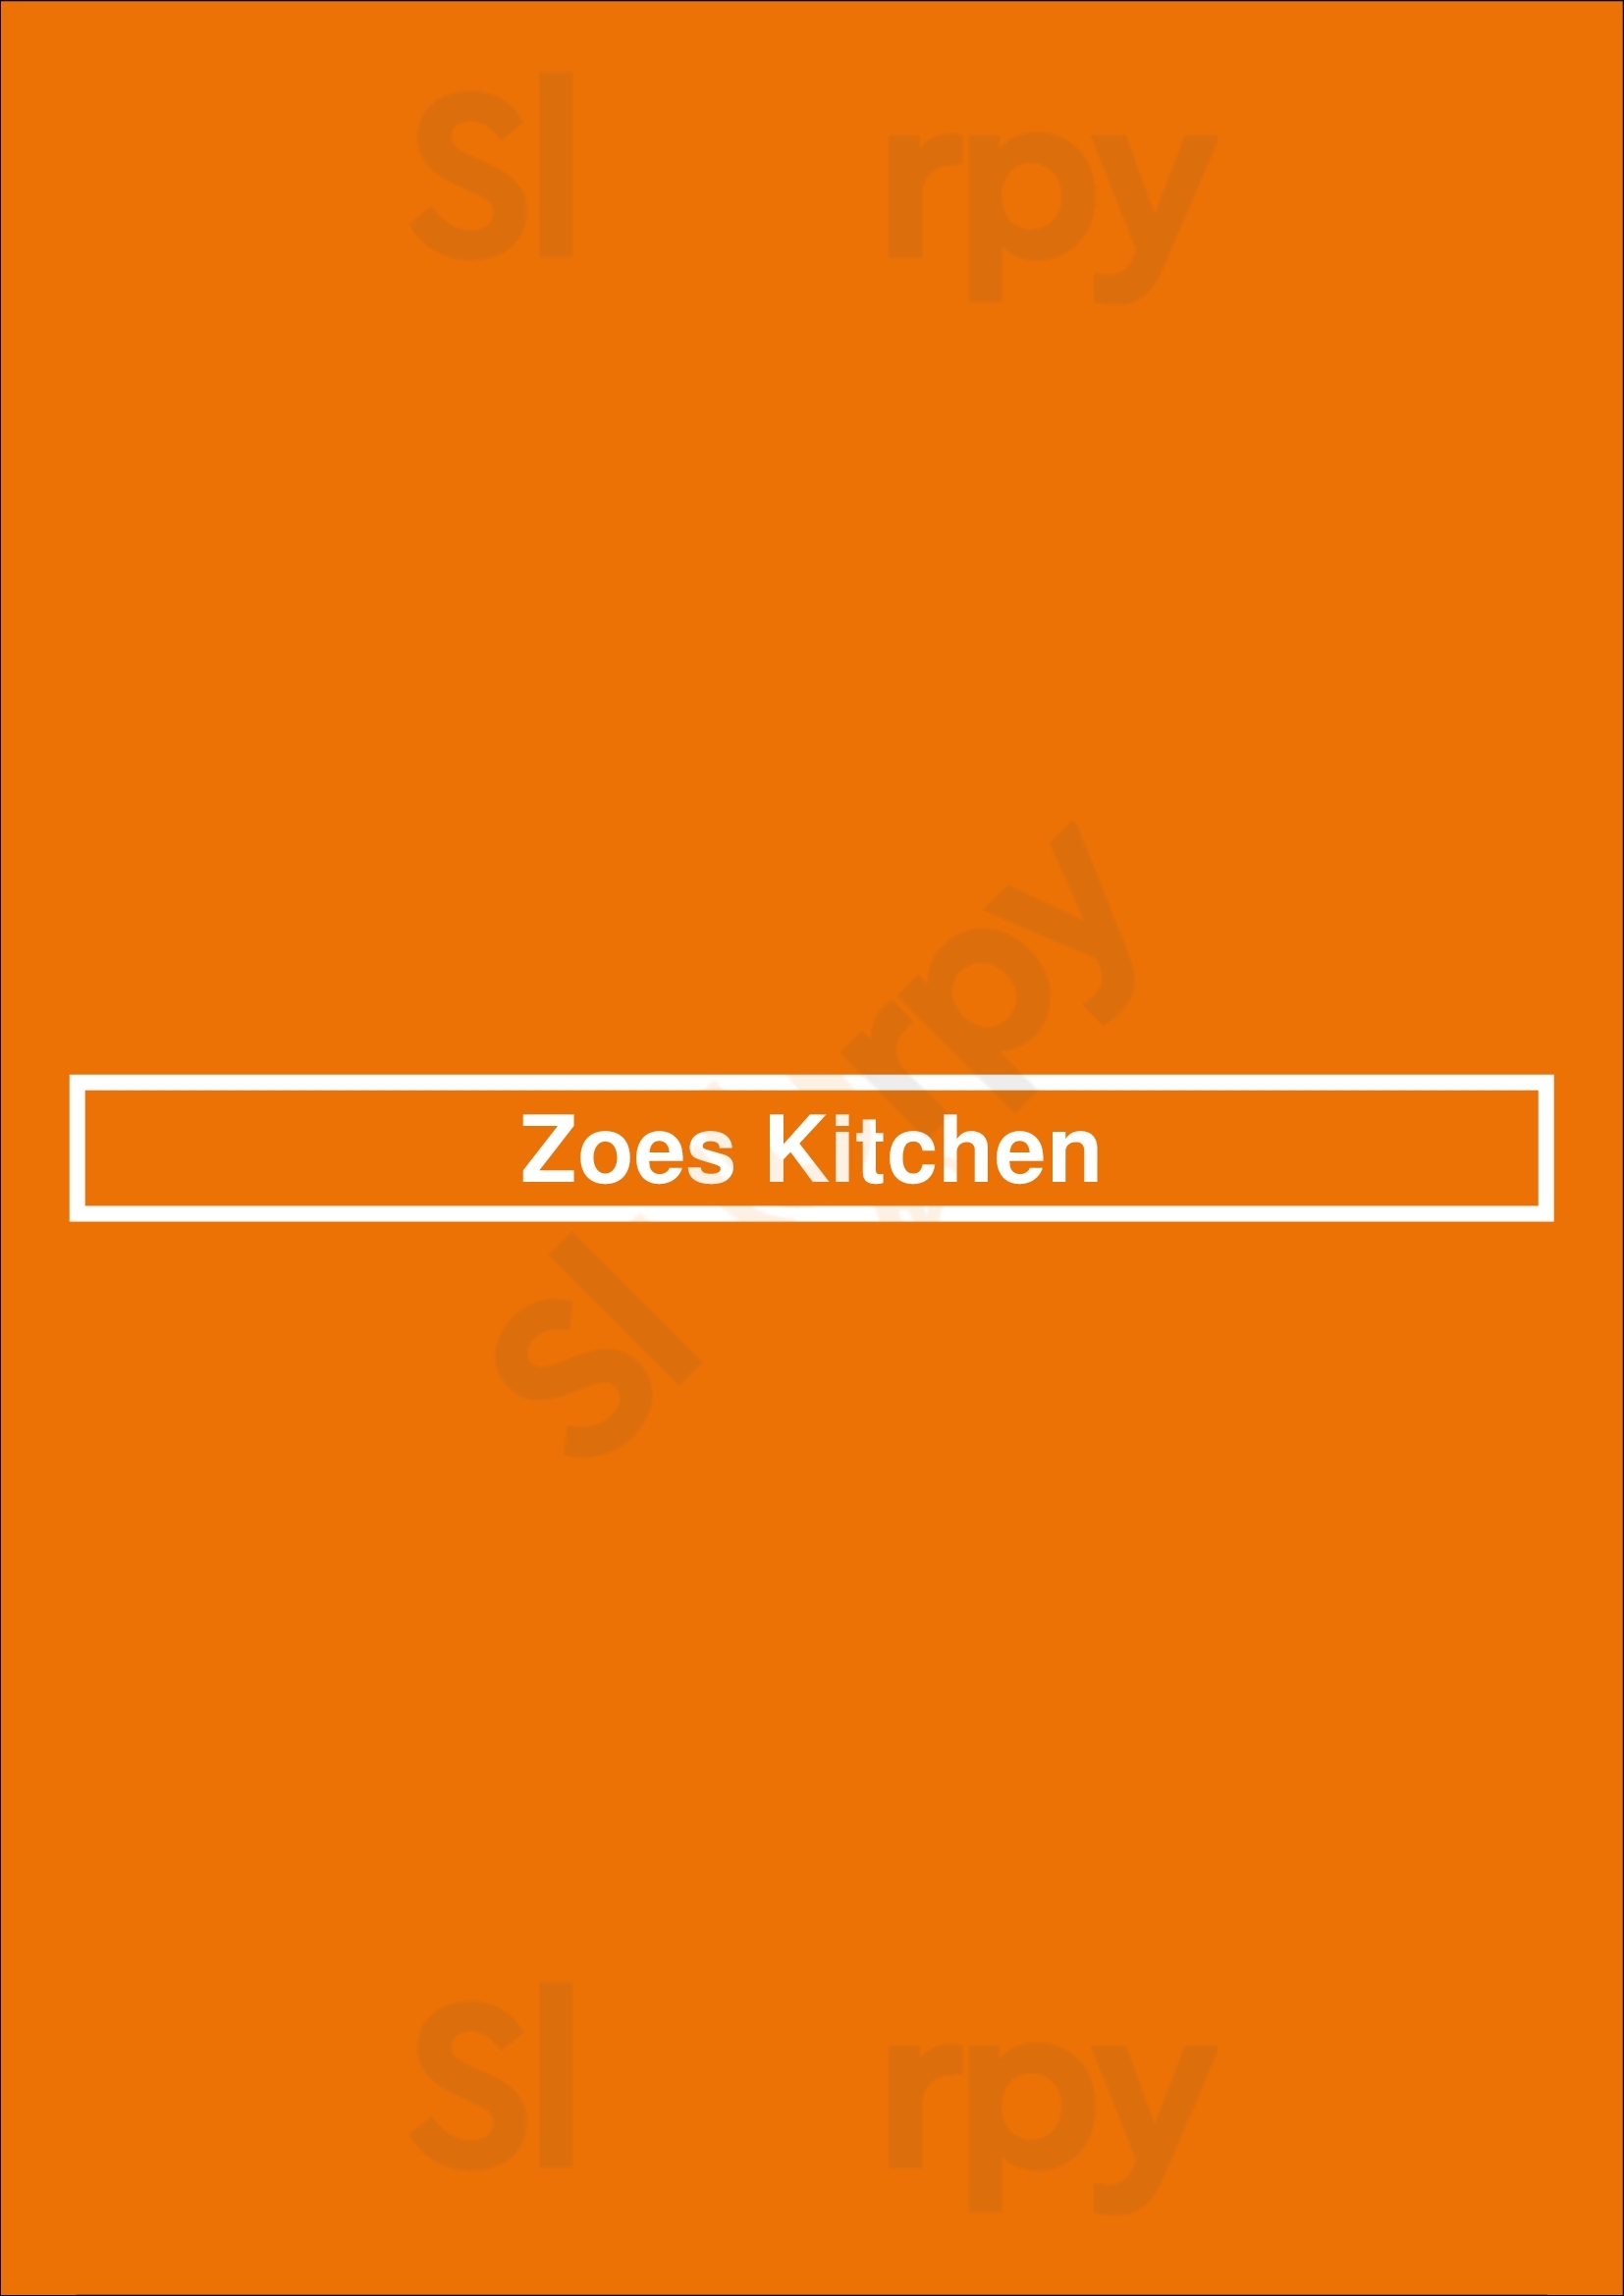 Zoes Kitchen Baton Rouge Menu - 1